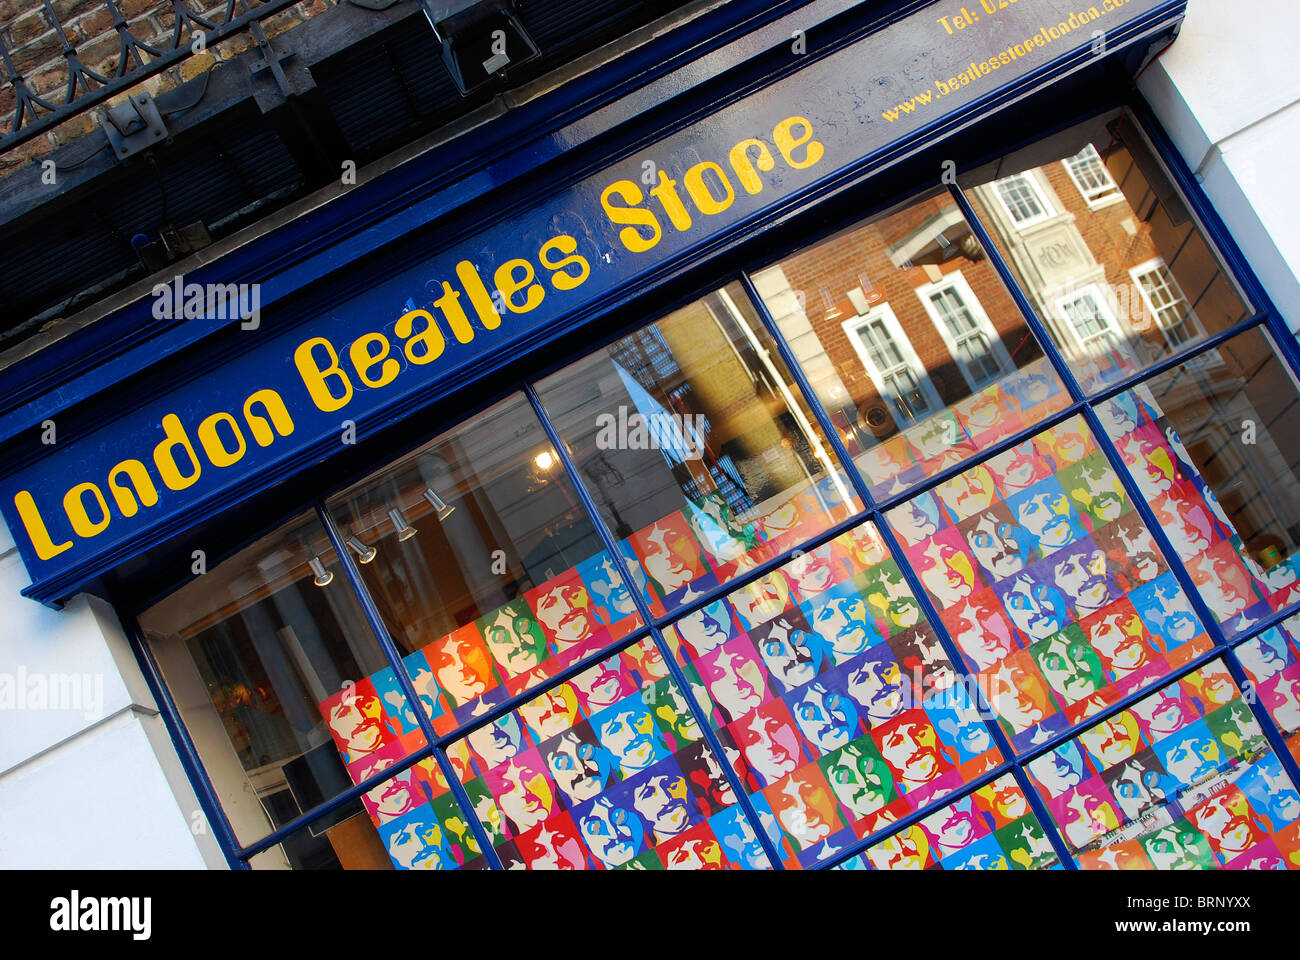 Beatles Store on Baker street, London Stock Photo